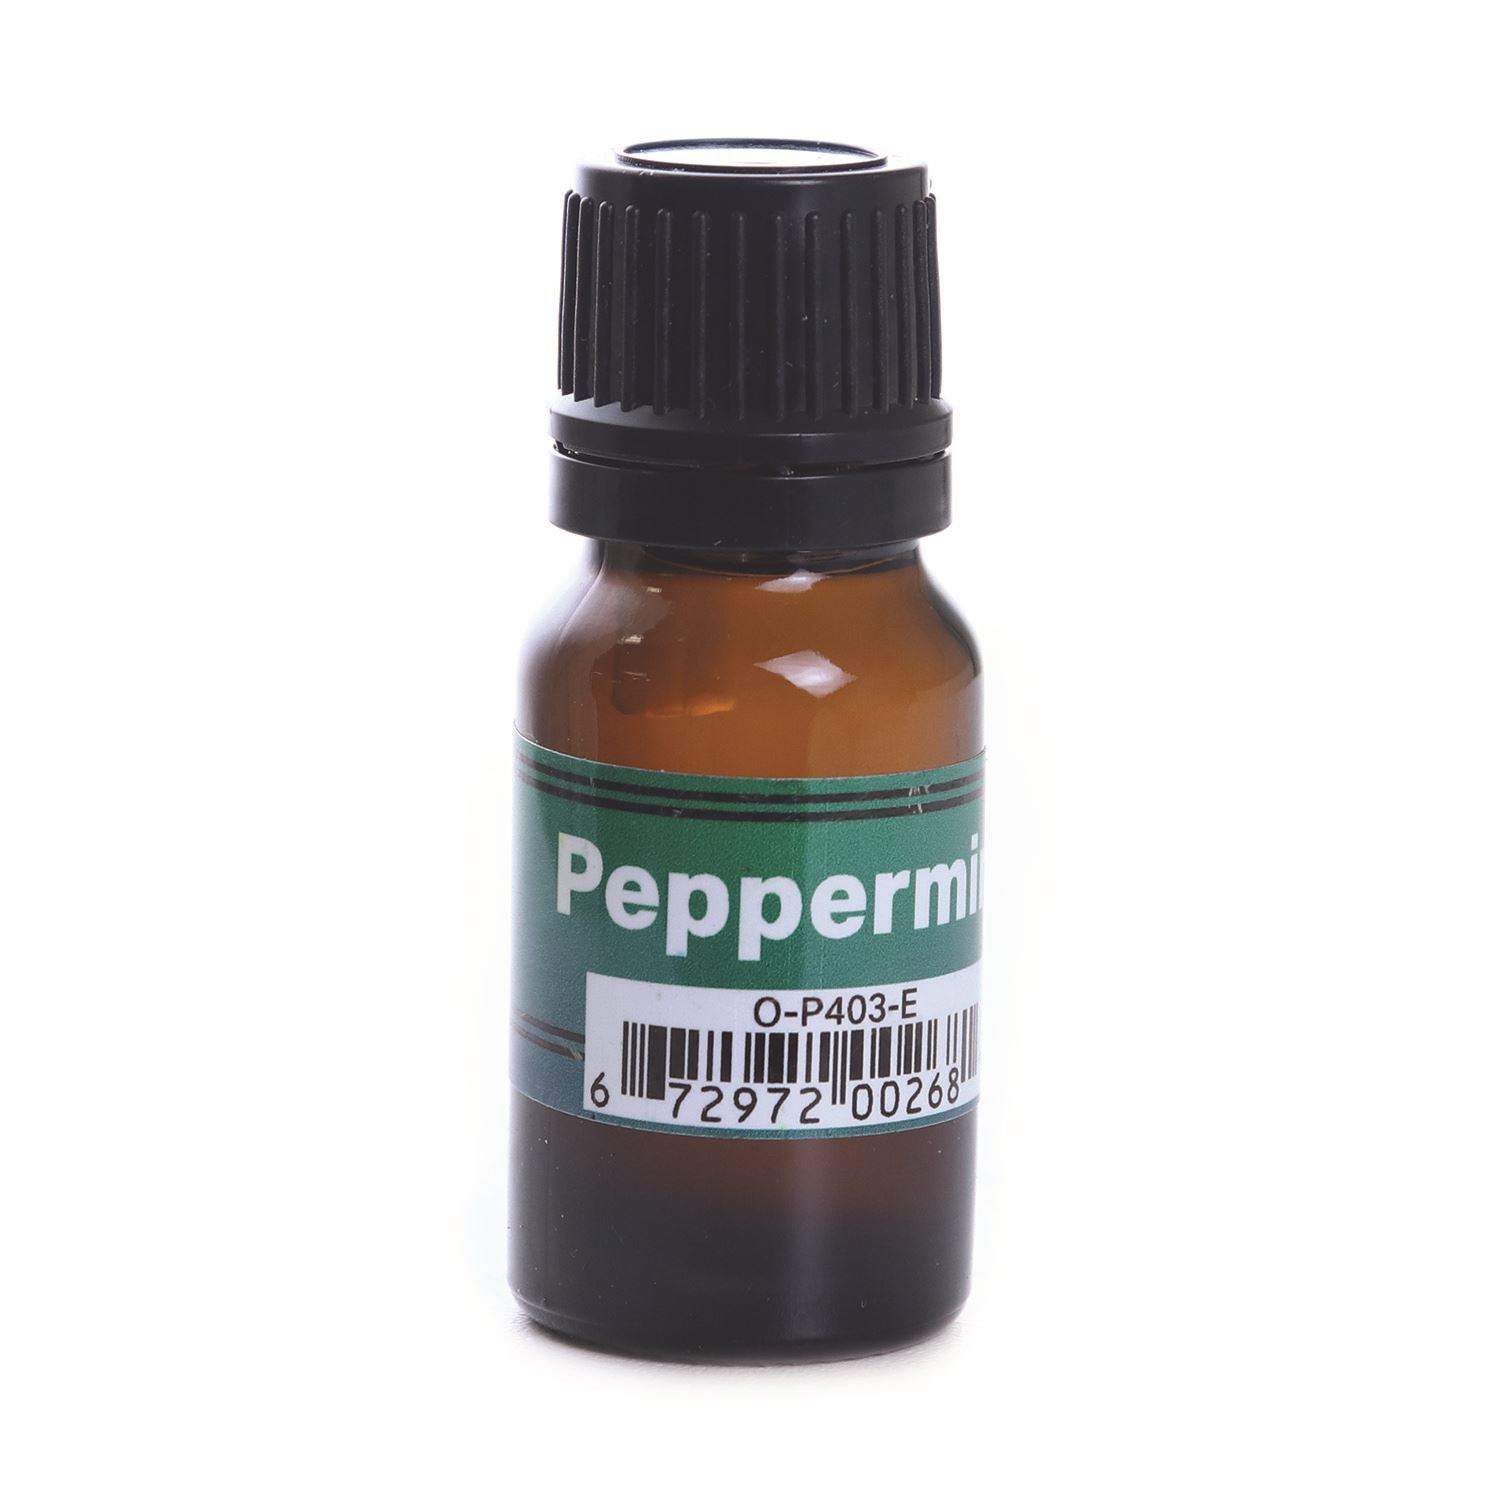 Peppermint Arvensis Essential Oil -1/3oz